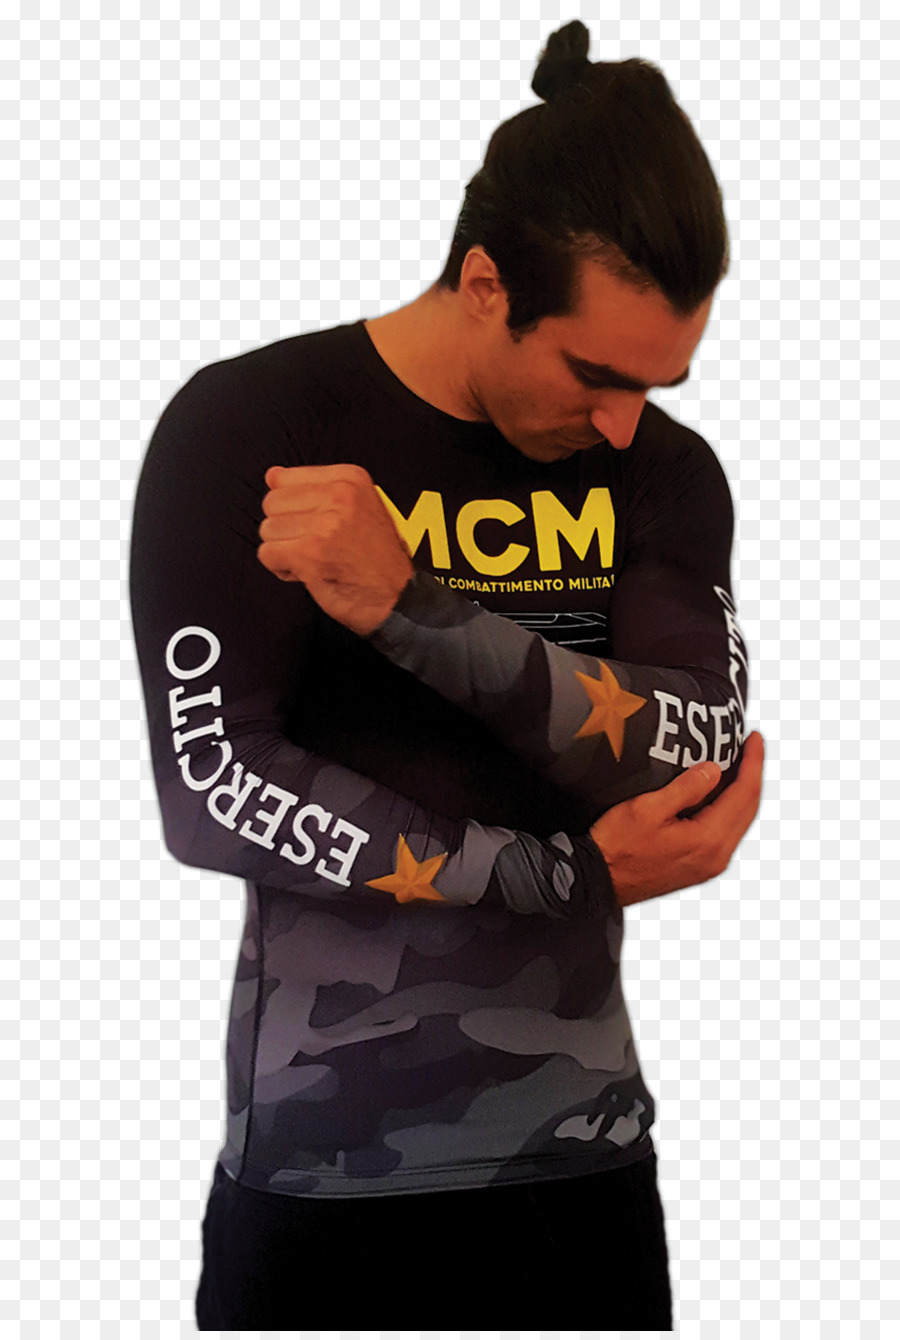 T shirt Hoodie Mixed martial arts Kleidung - T Shirt